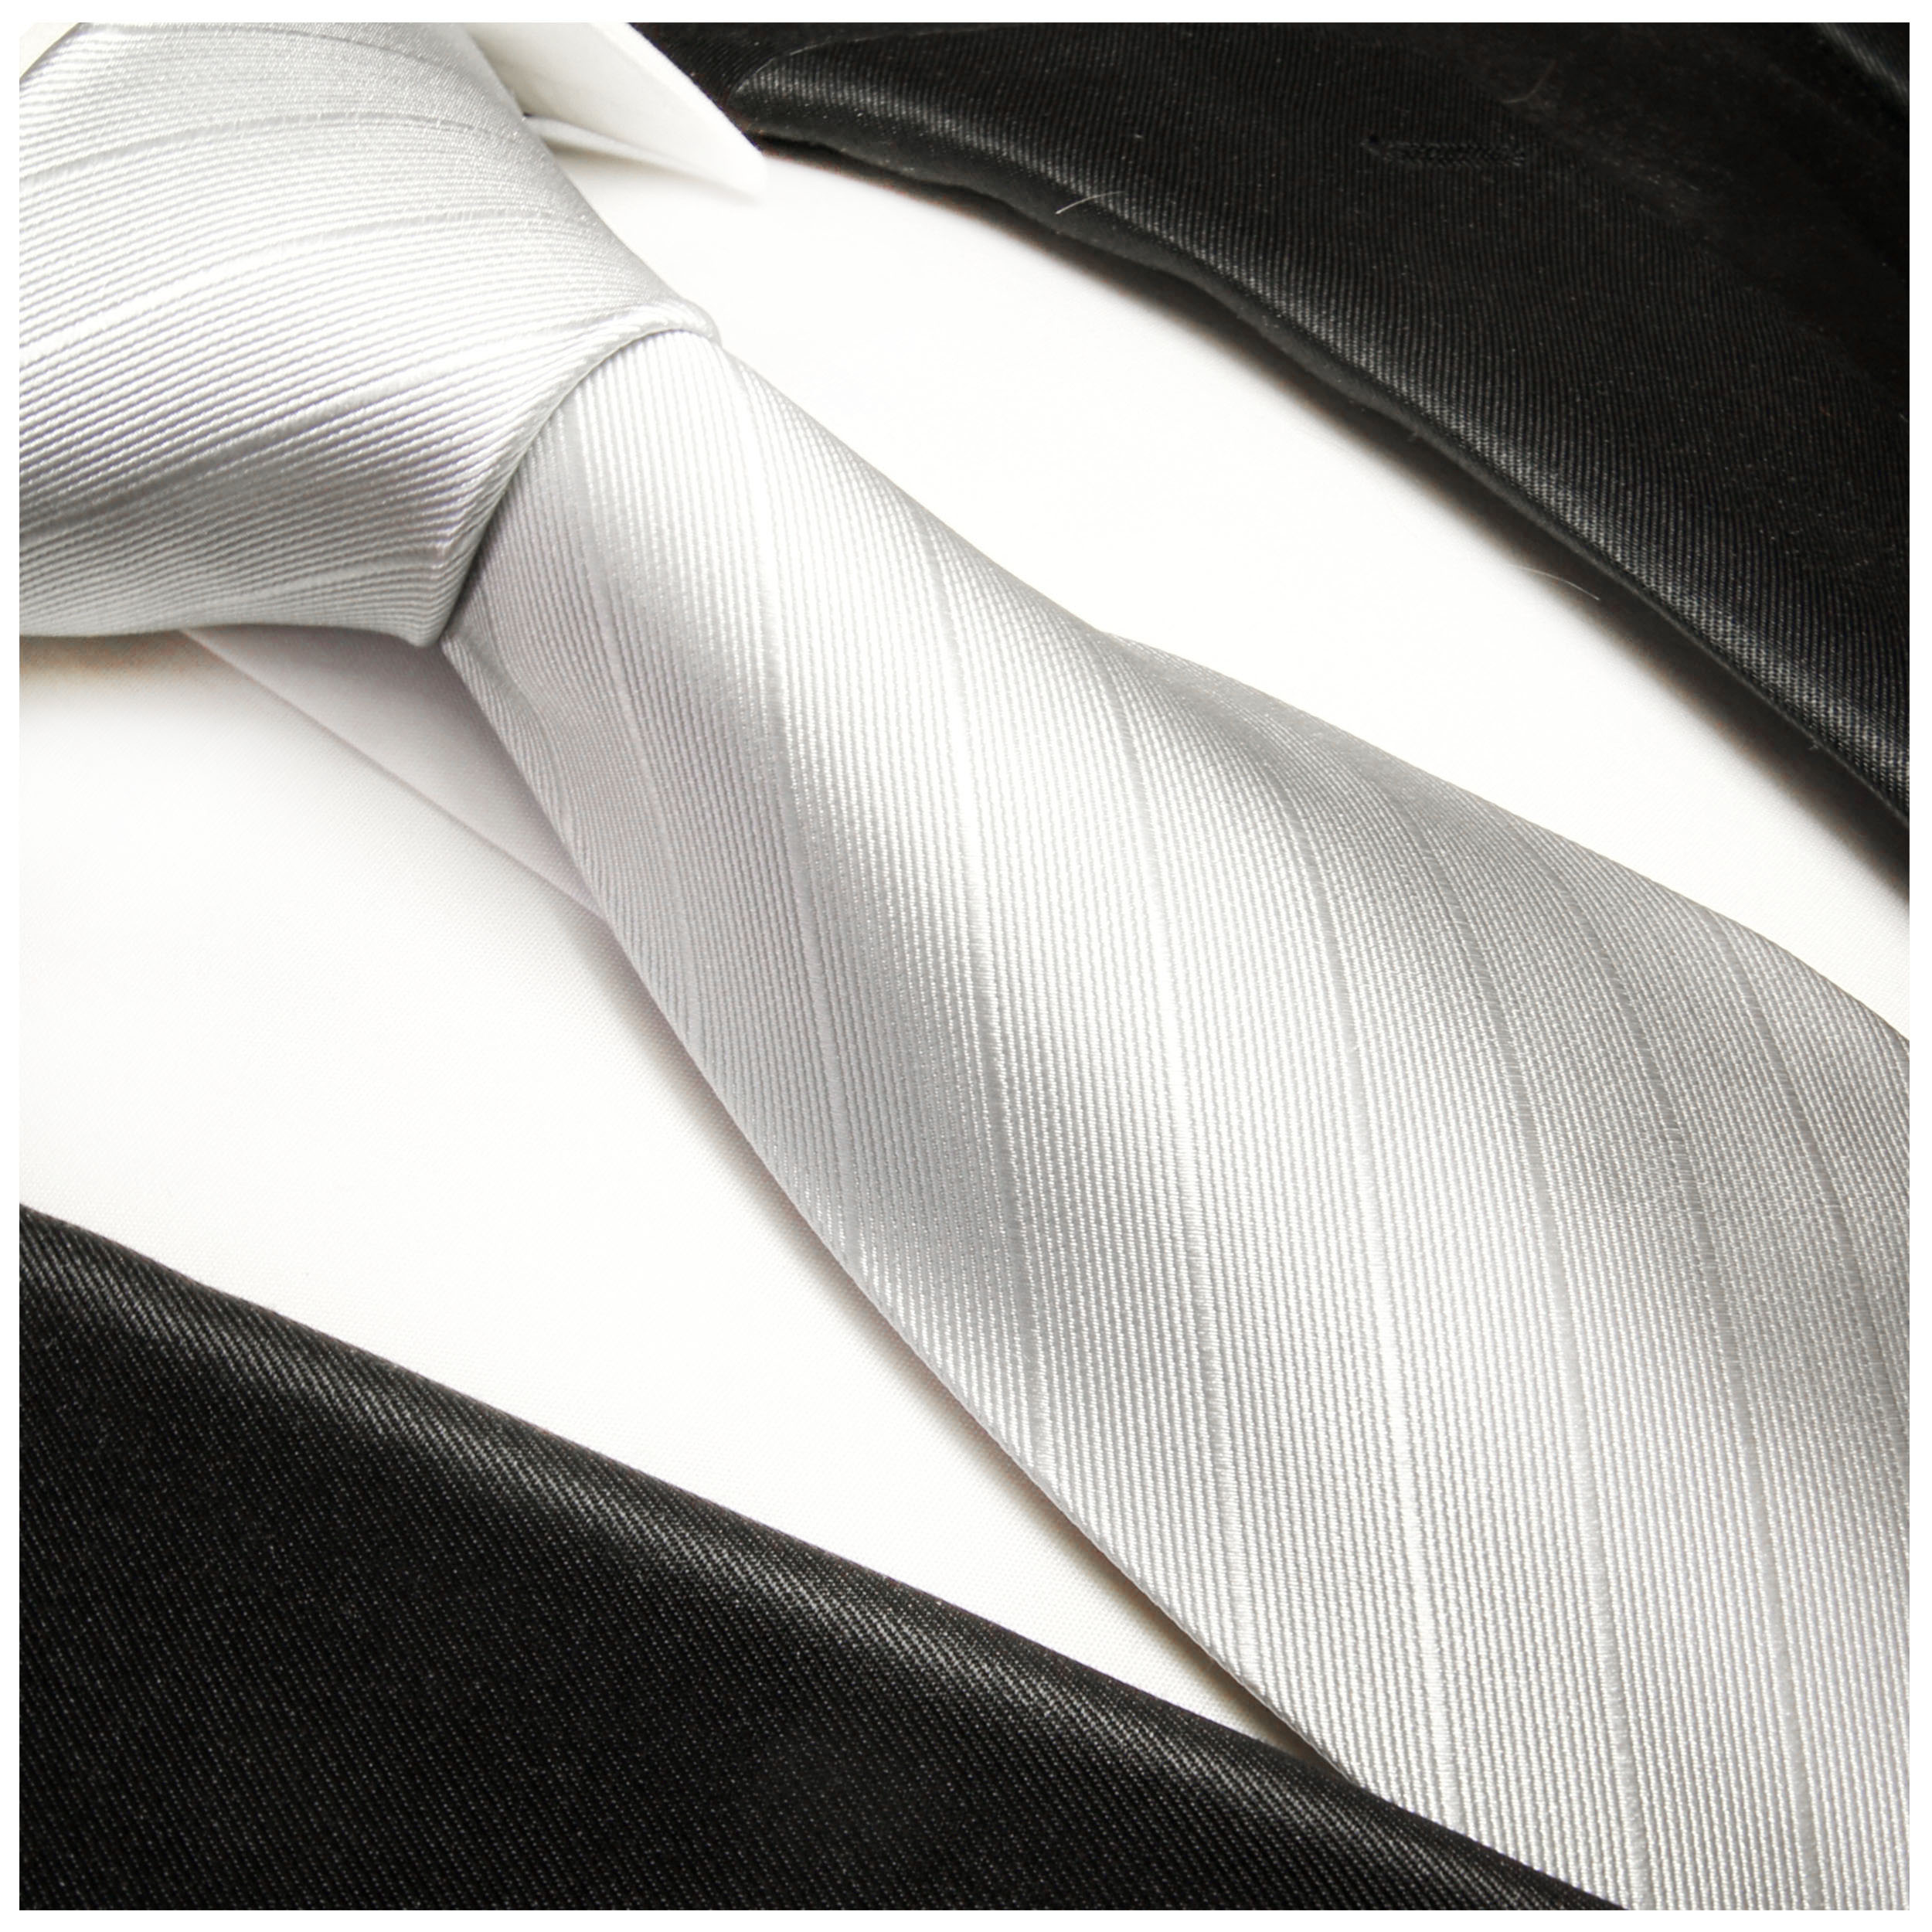 Krawatte silber uni Paul | gestreift | Shop - -50% KLICKEN Malone HIER